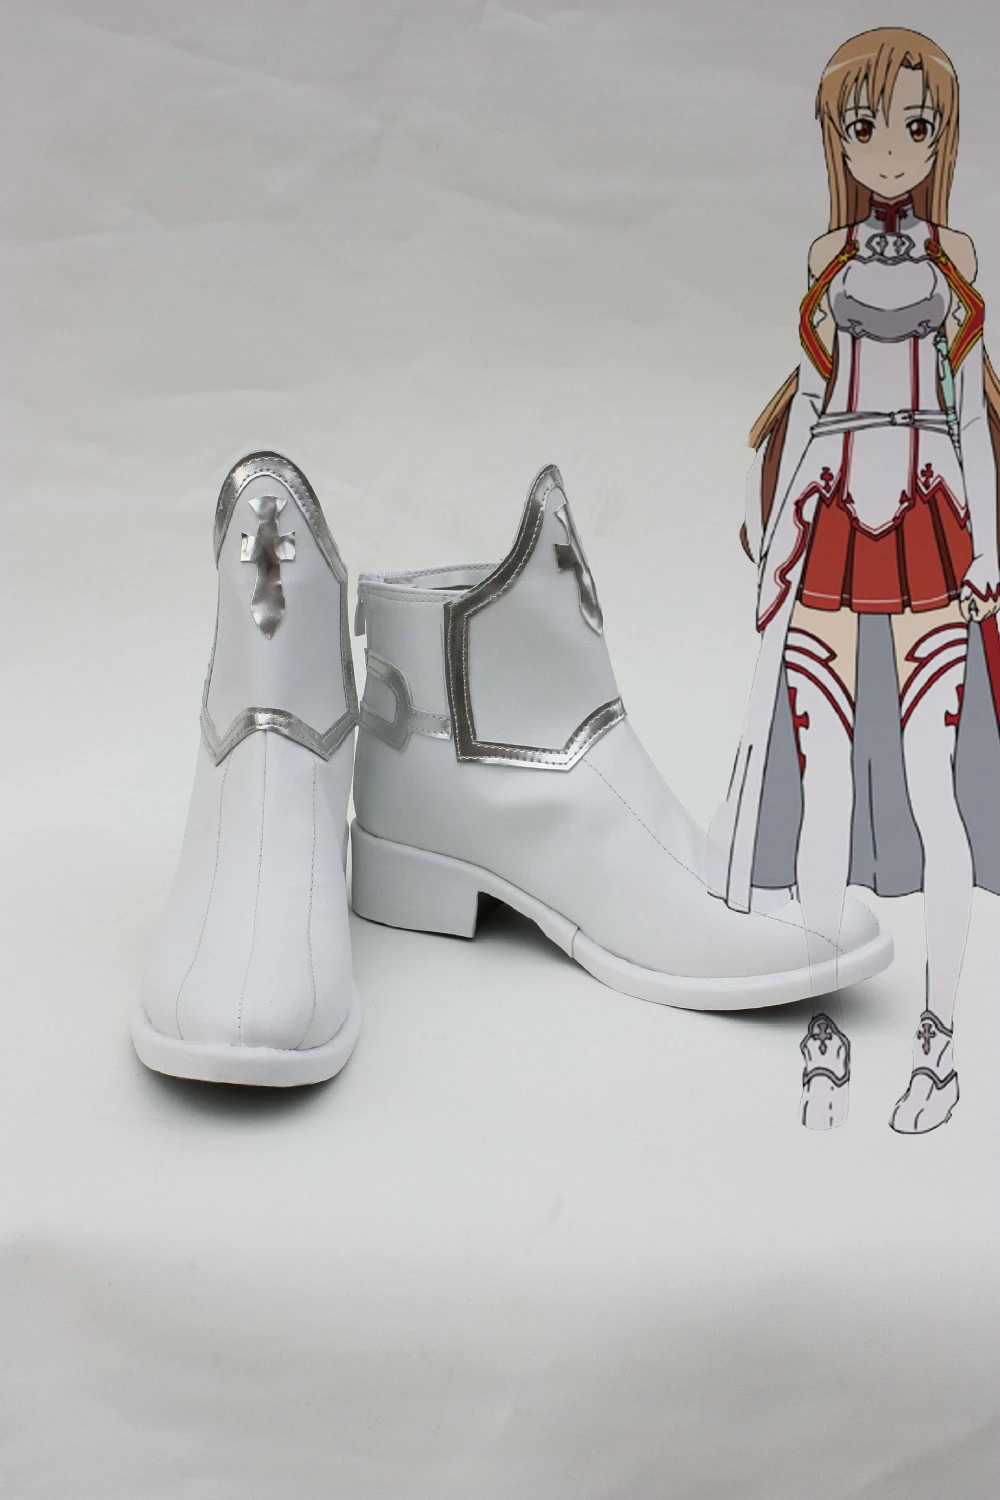 personalizados de Sword Art Online, envío gratis, baratos, Cosplay|shoe box art|art shoes bootsart calligraphy - AliExpress